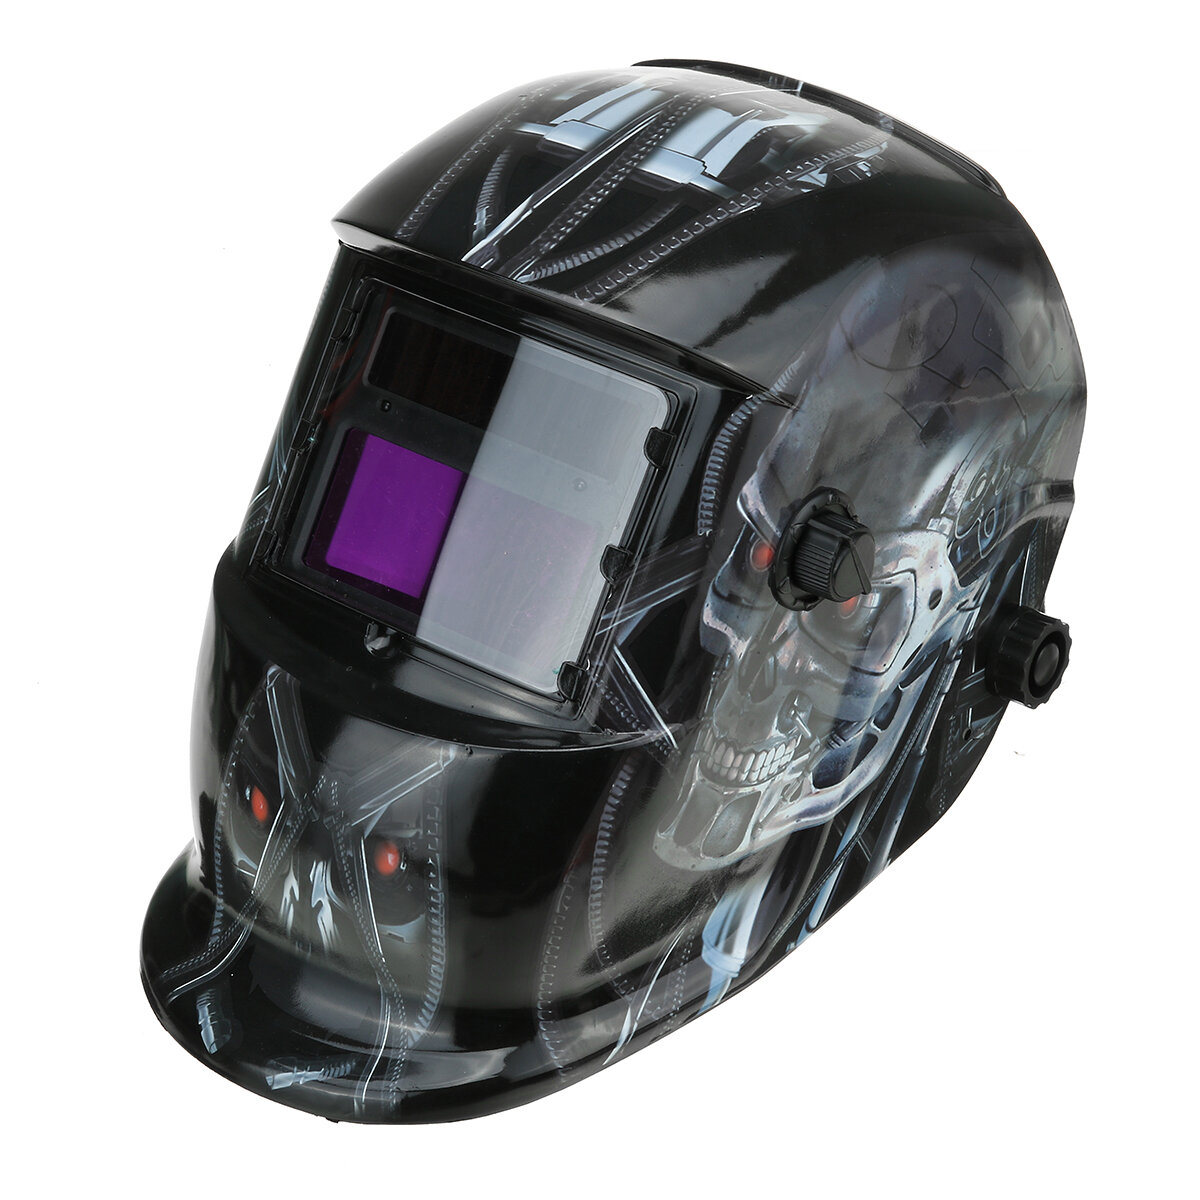 Solar Power Welding Helmet Auto Darkening Mask TIG MIG Grinding Adjustable Knob, Banggood  - buy with discount